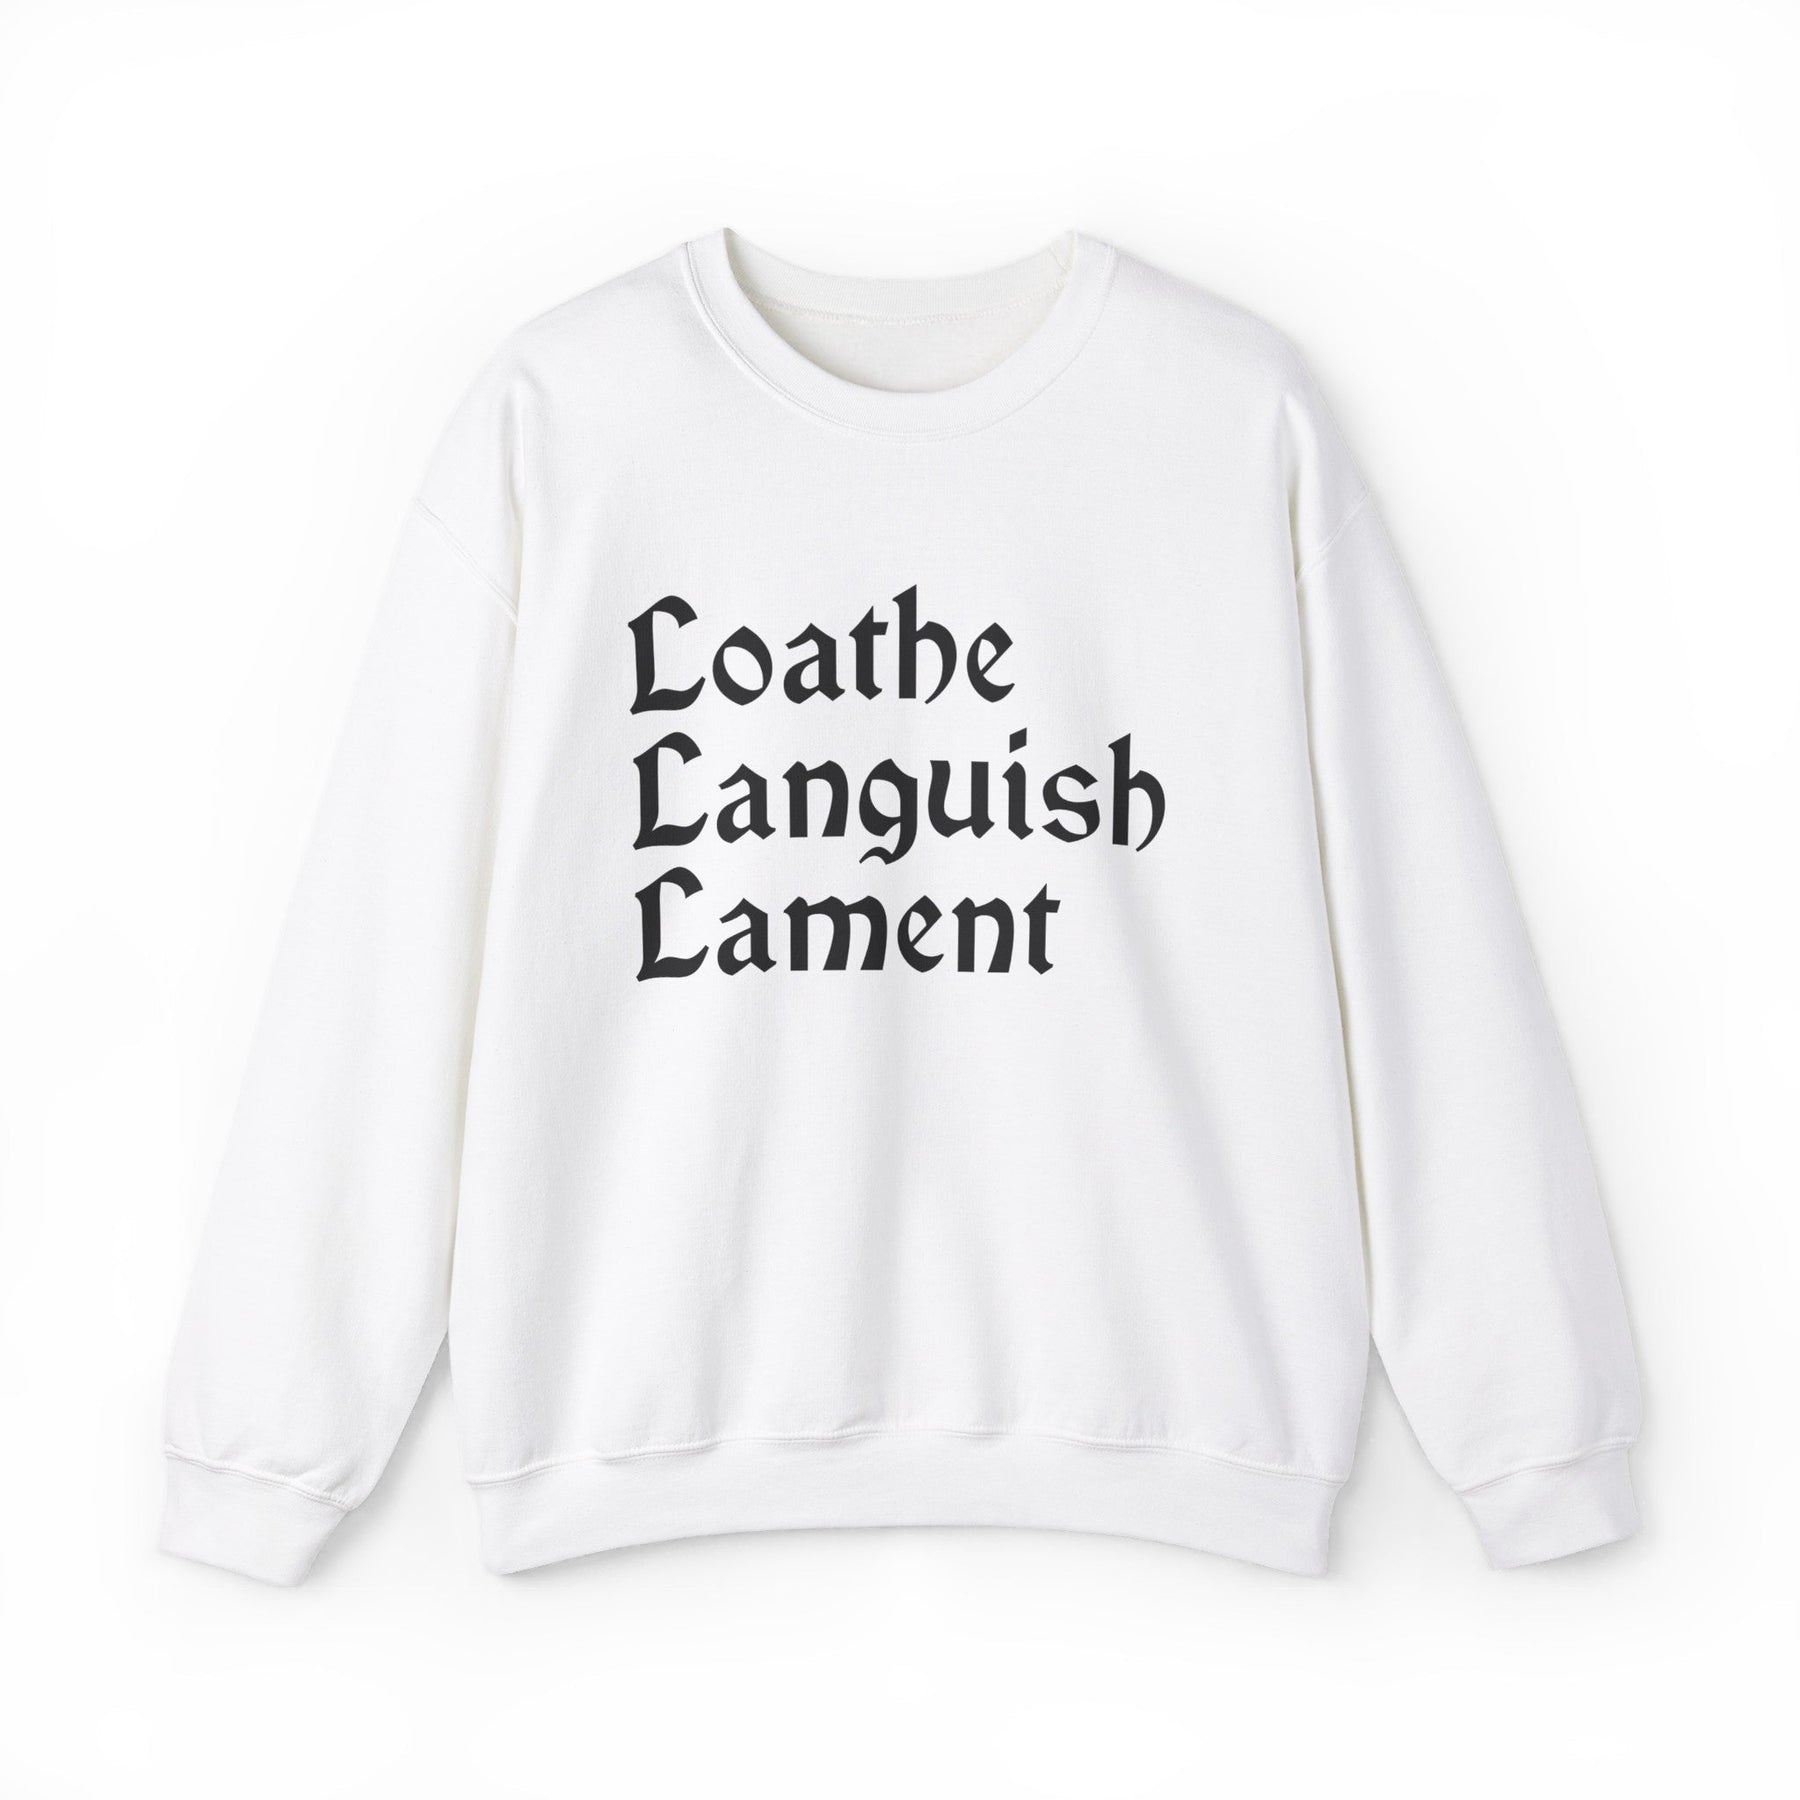 Loathe Languish Lament Gothic Crew Neck Sweatshirt - Goth Cloth Co.Sweatshirt33881129746516746424